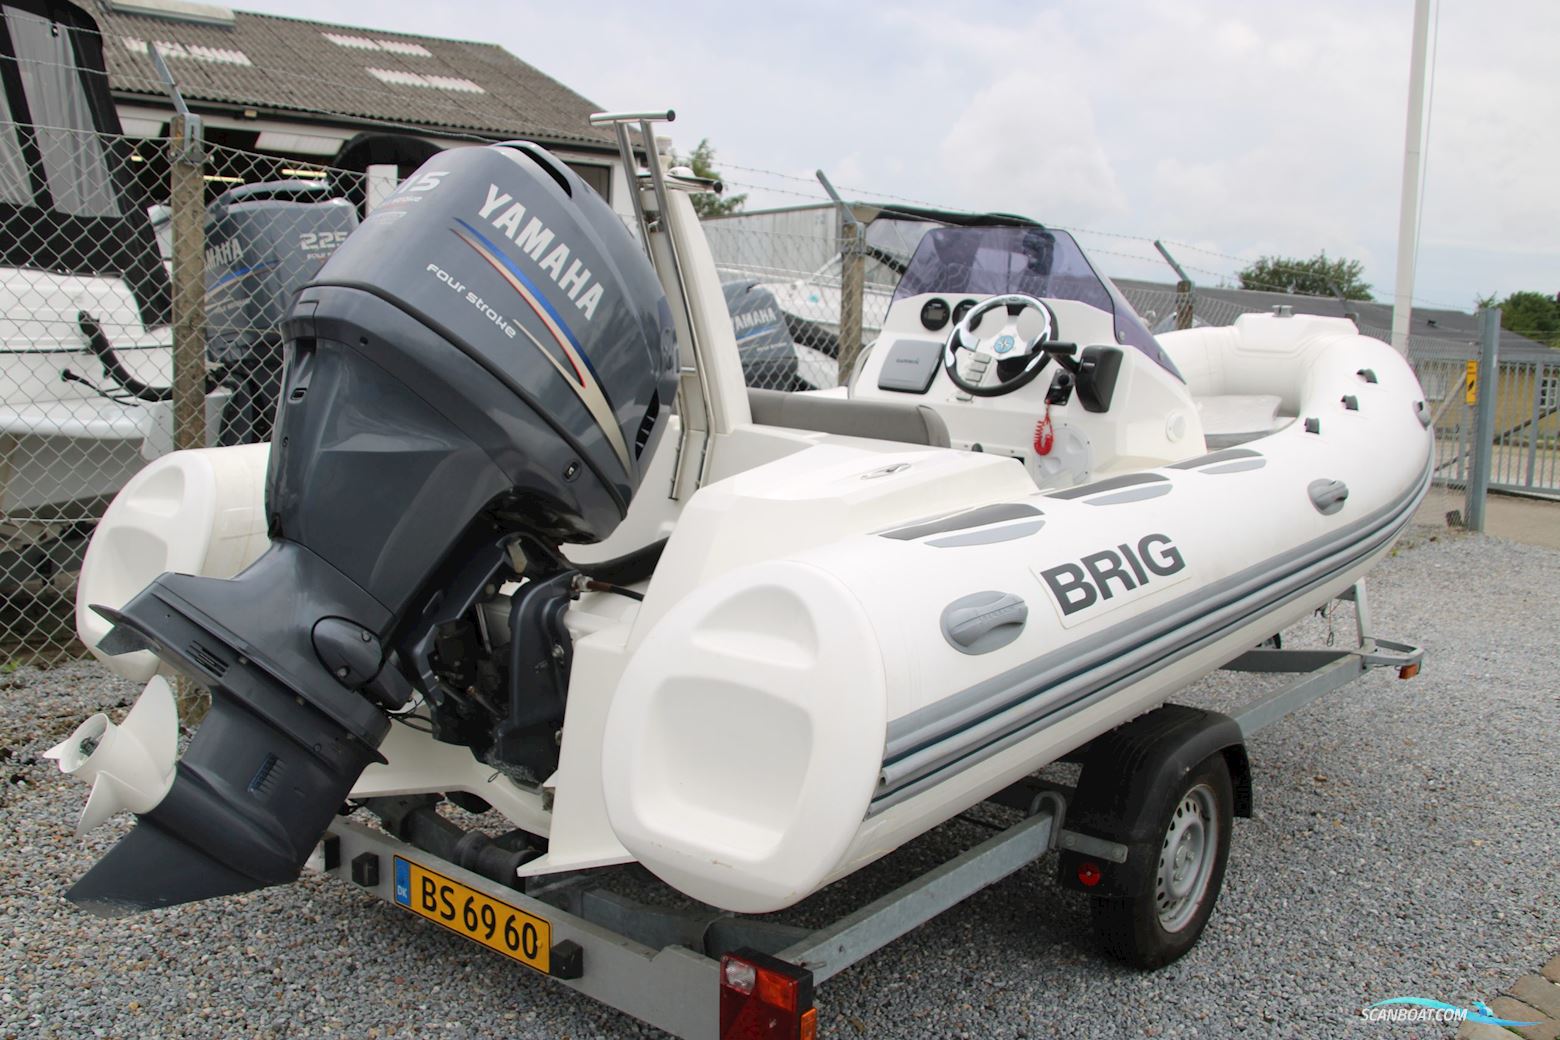 Brig E480 Eagle Schlauchboot / Rib 2015, Dänemark